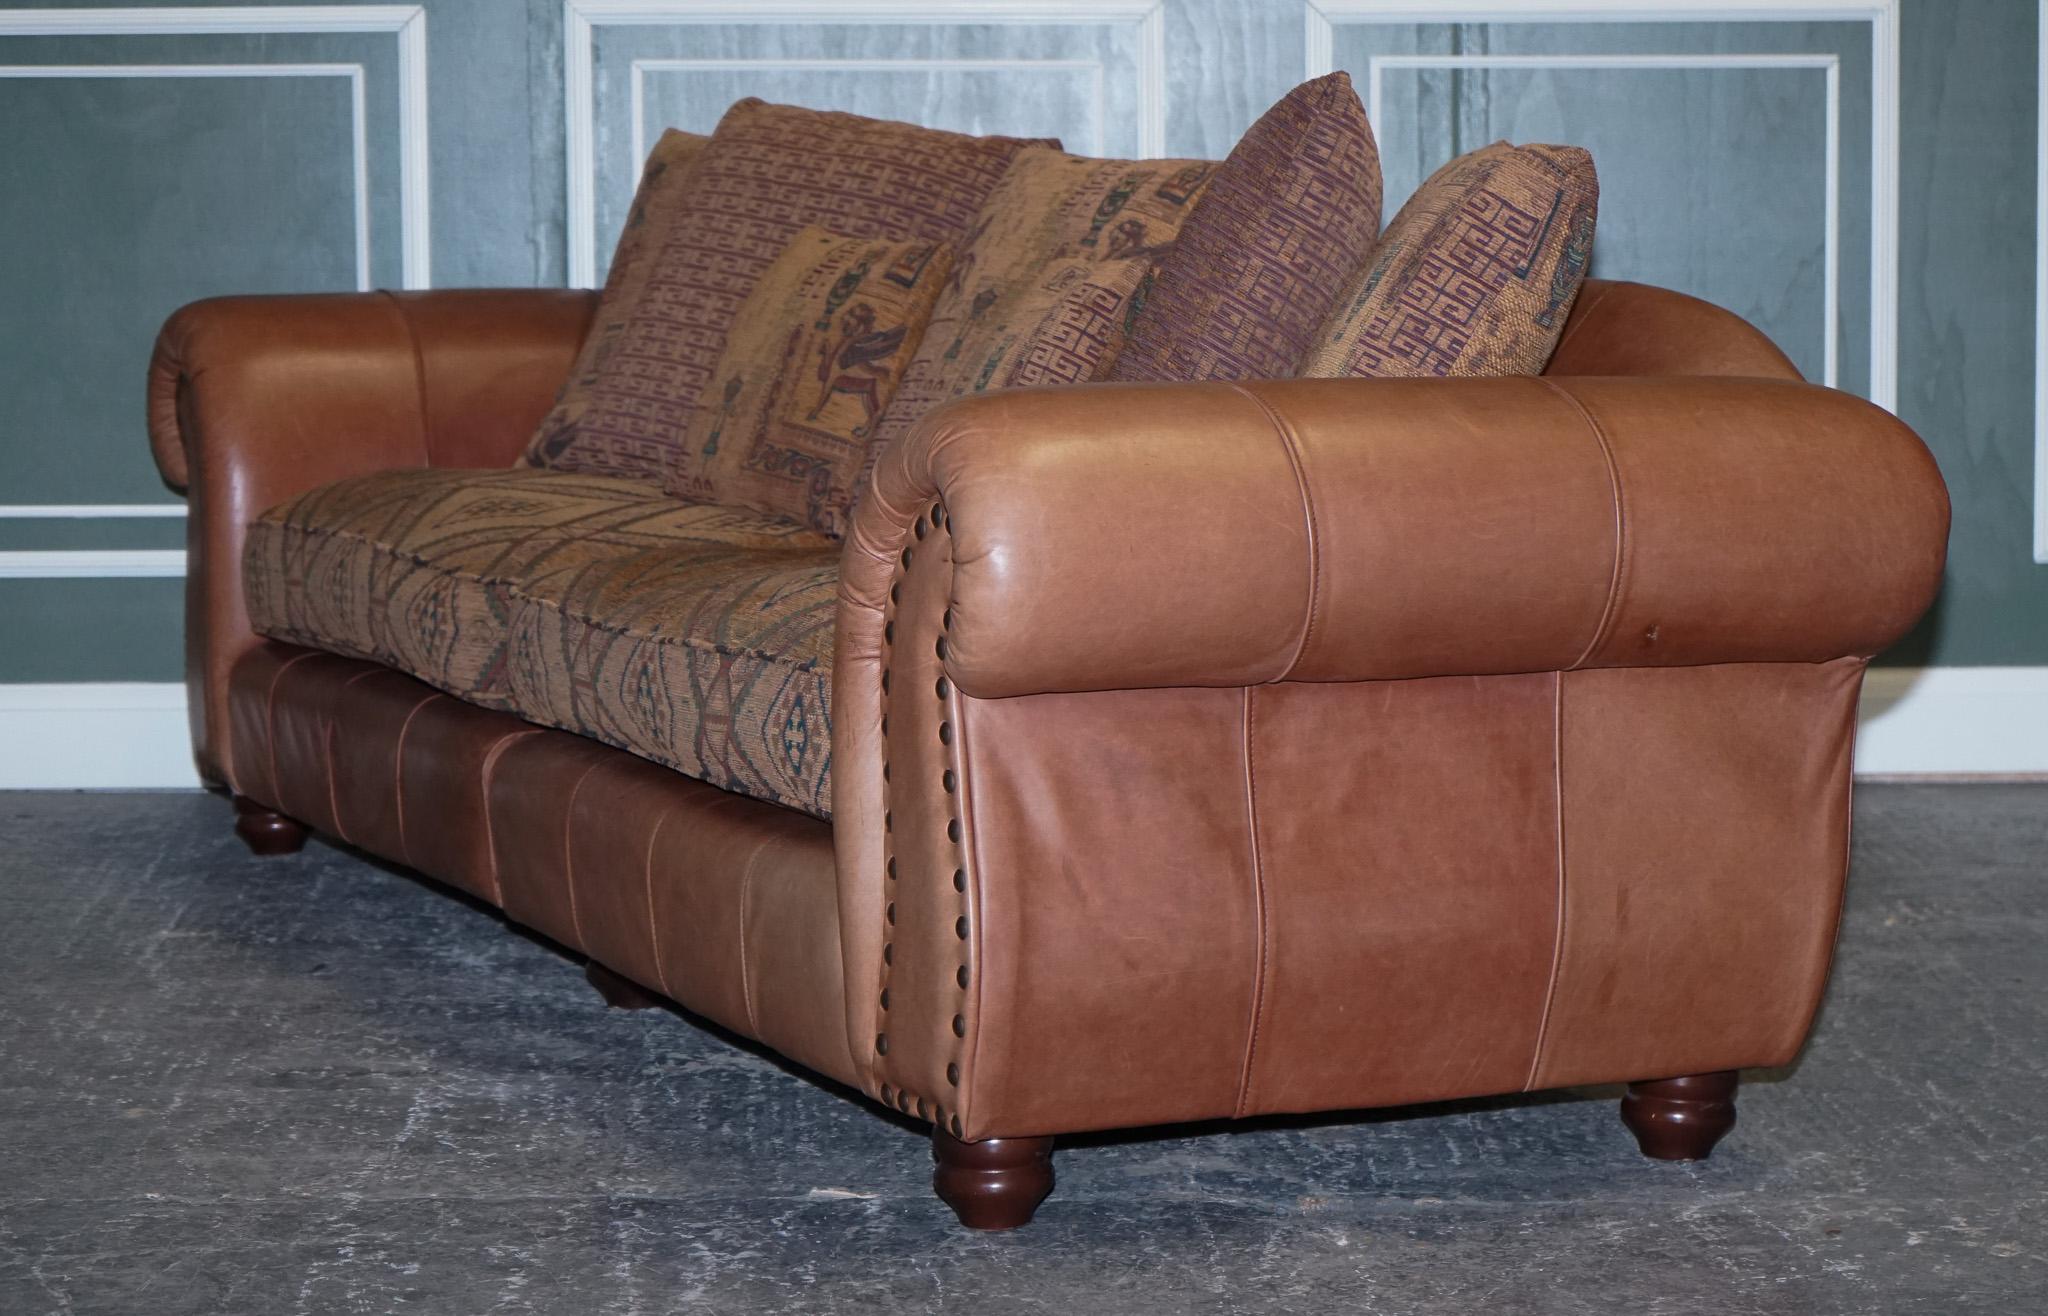 Stunning Thomas Lloyd Leather with Egyptian Pattern Fabric Grand Sofa 5